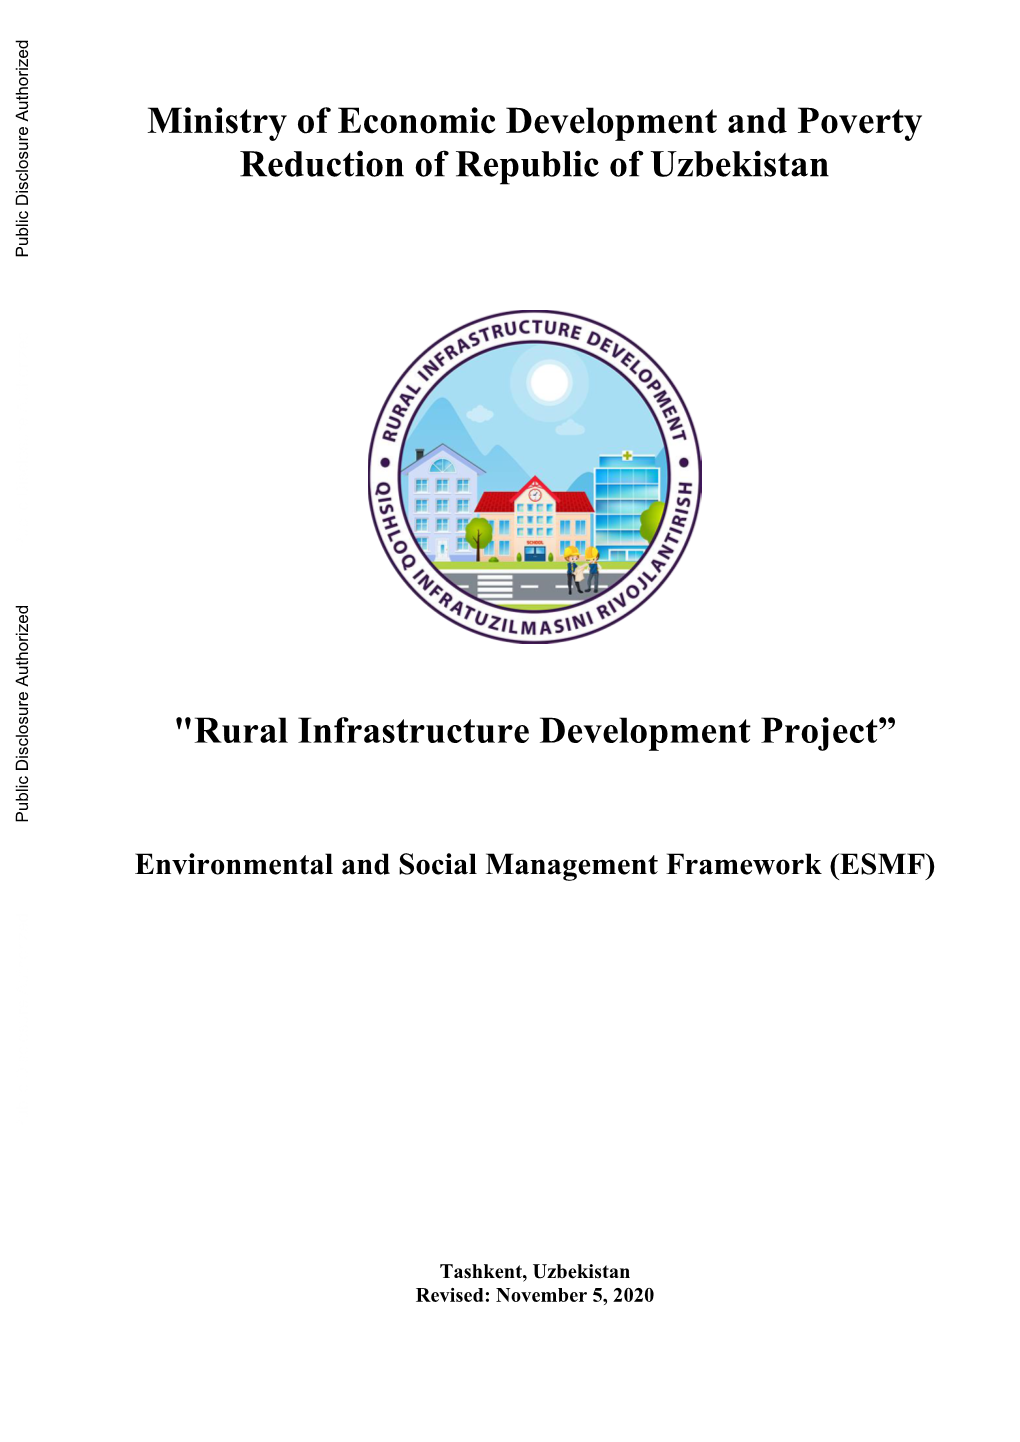 Rural Infrastructure Development Project”